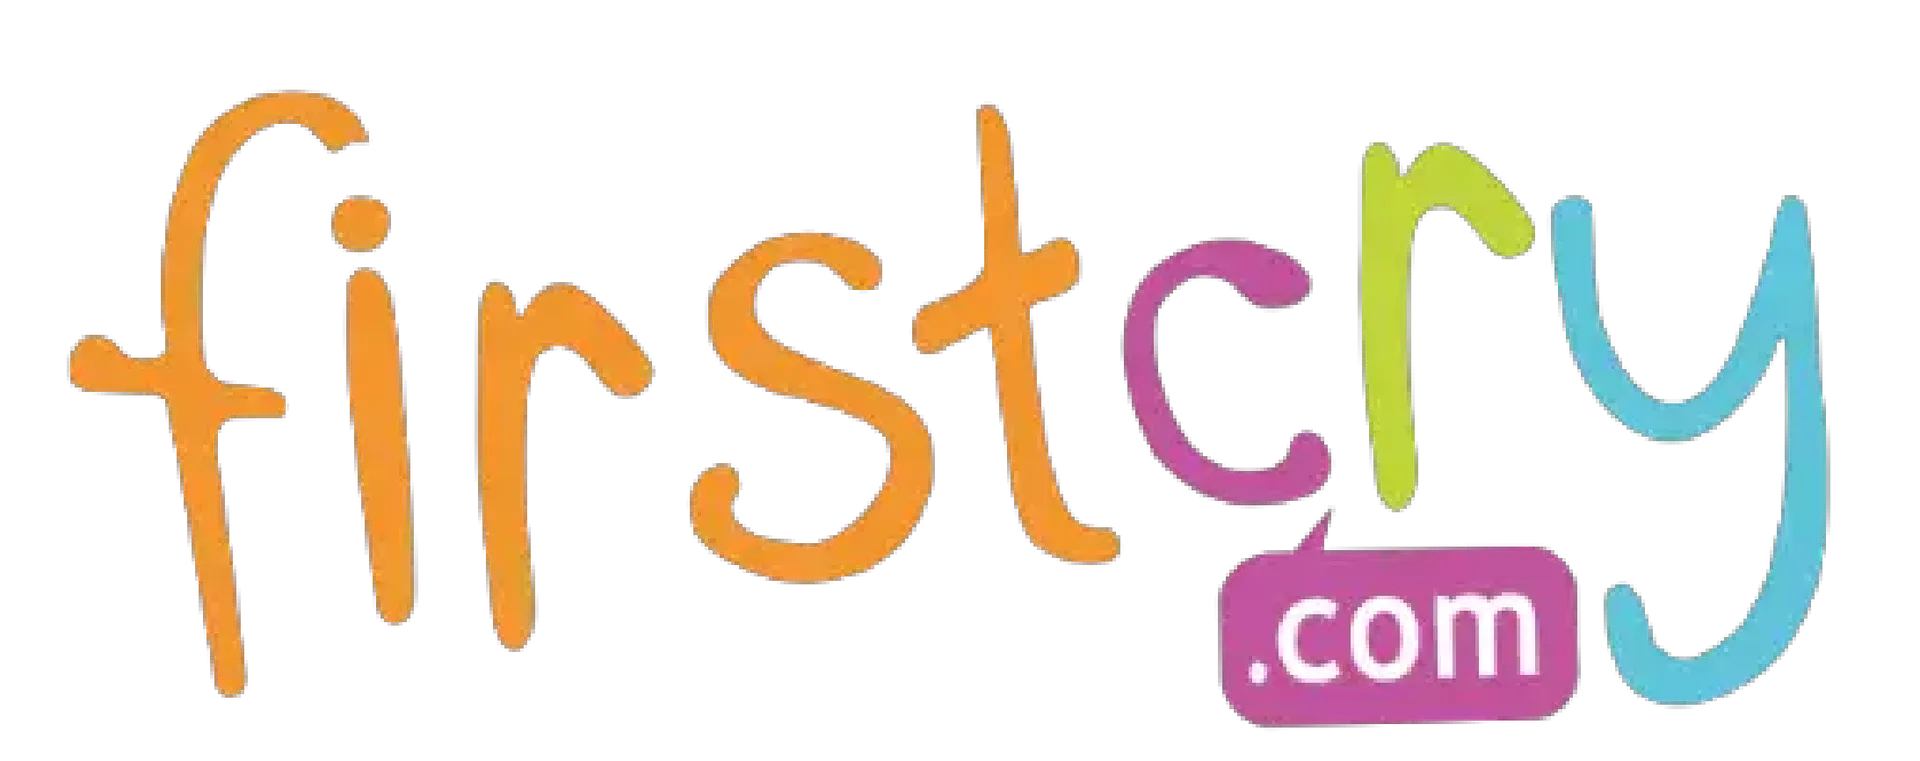 FIRSTCRY logo. Current catalogue